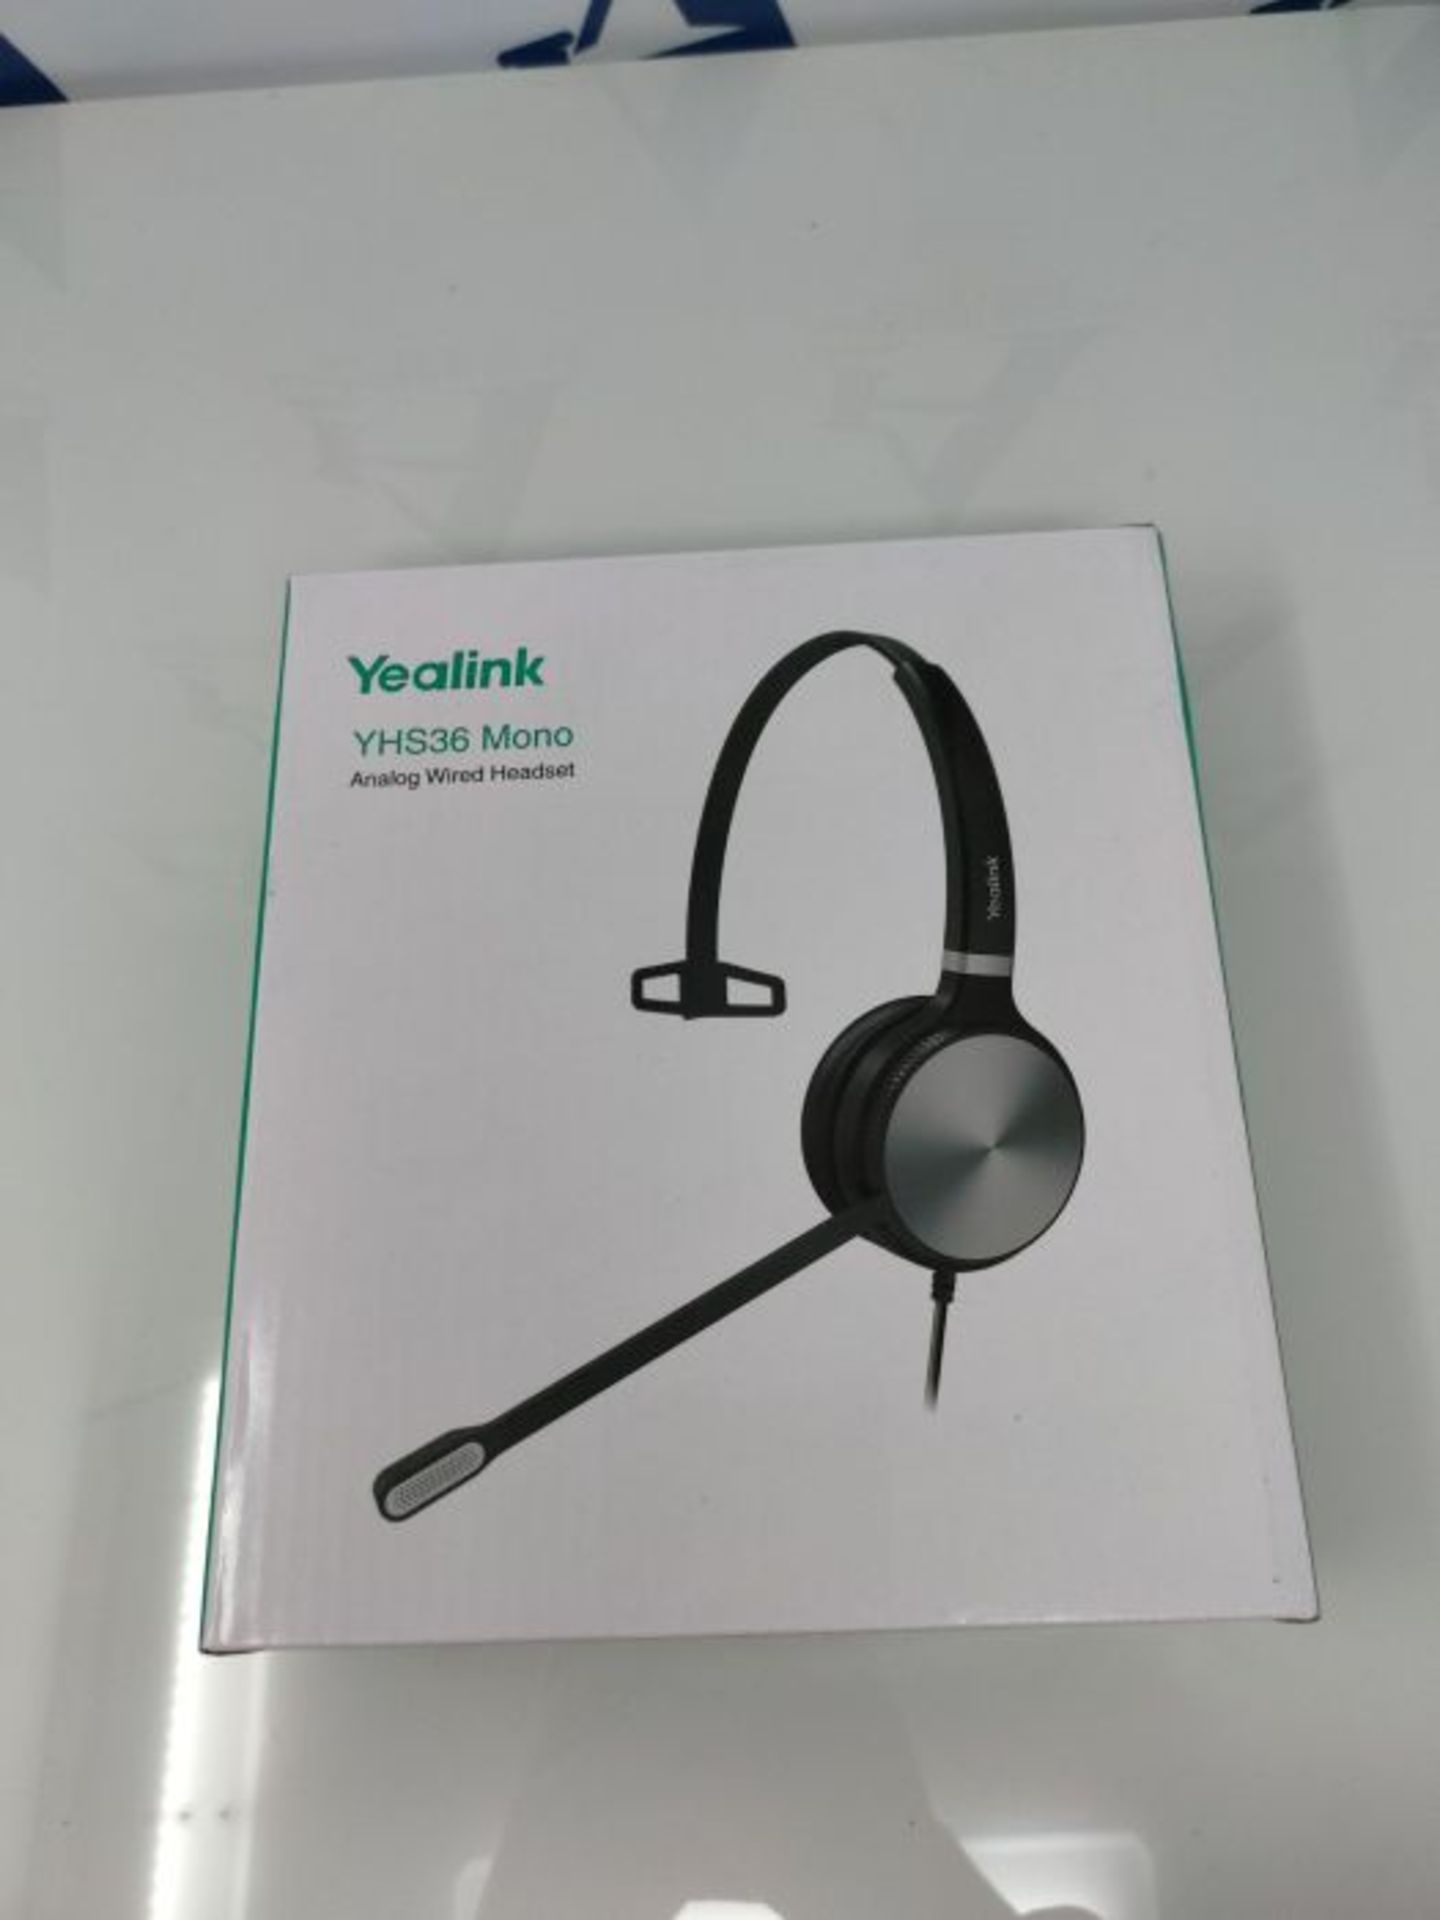 Yealink Headset YHS36 Mono - Image 2 of 3